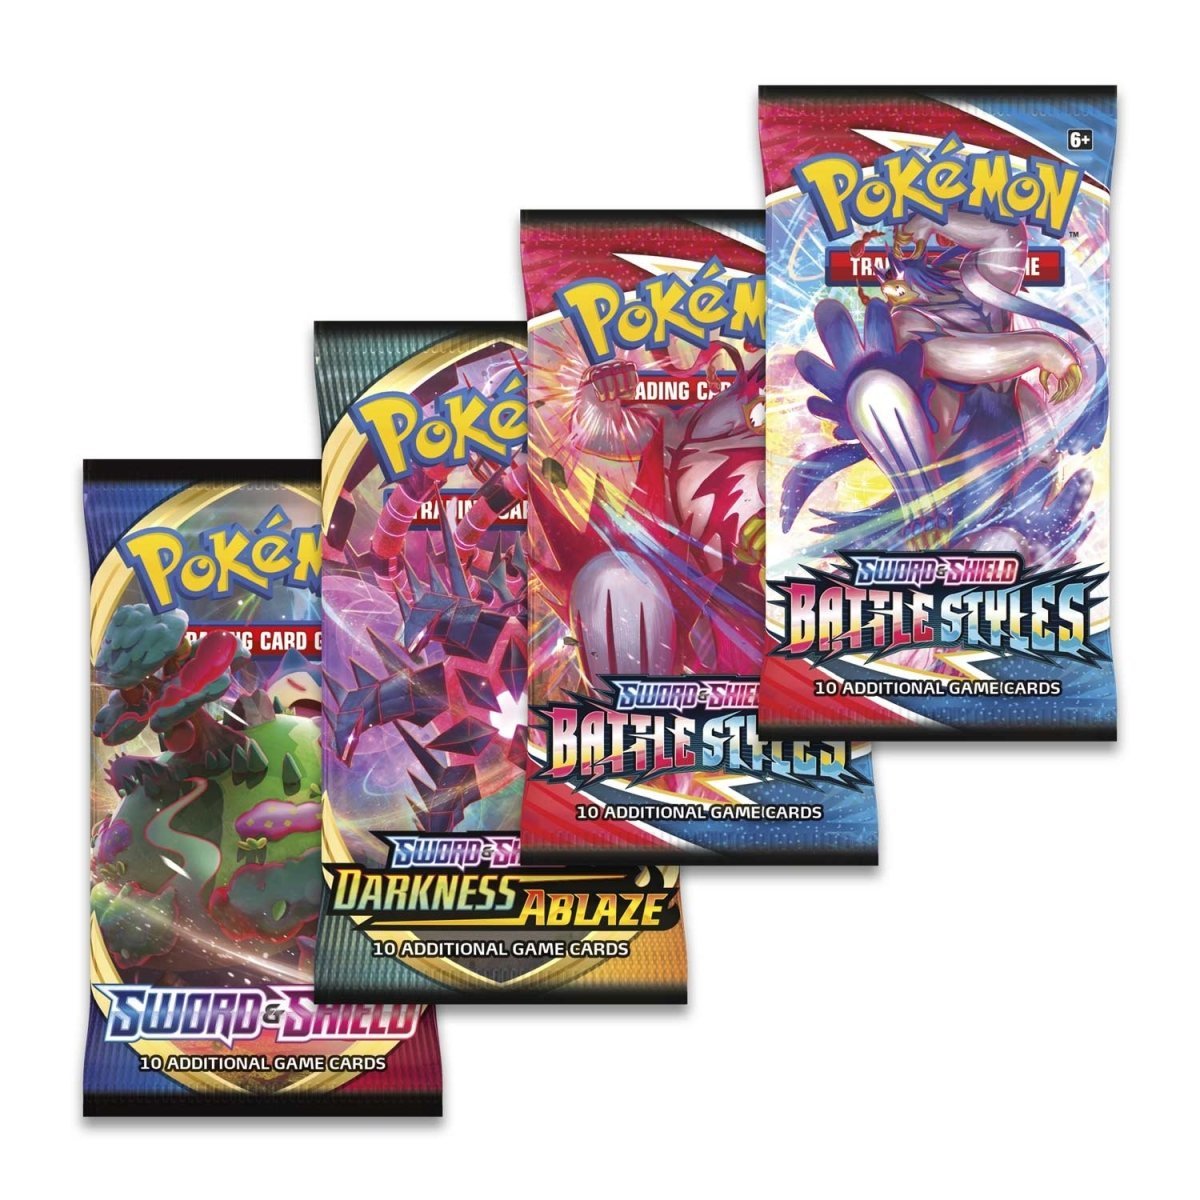 Pokémon TCG: Rapid Strike Urshifu V Box - PokeRvmCollection Box